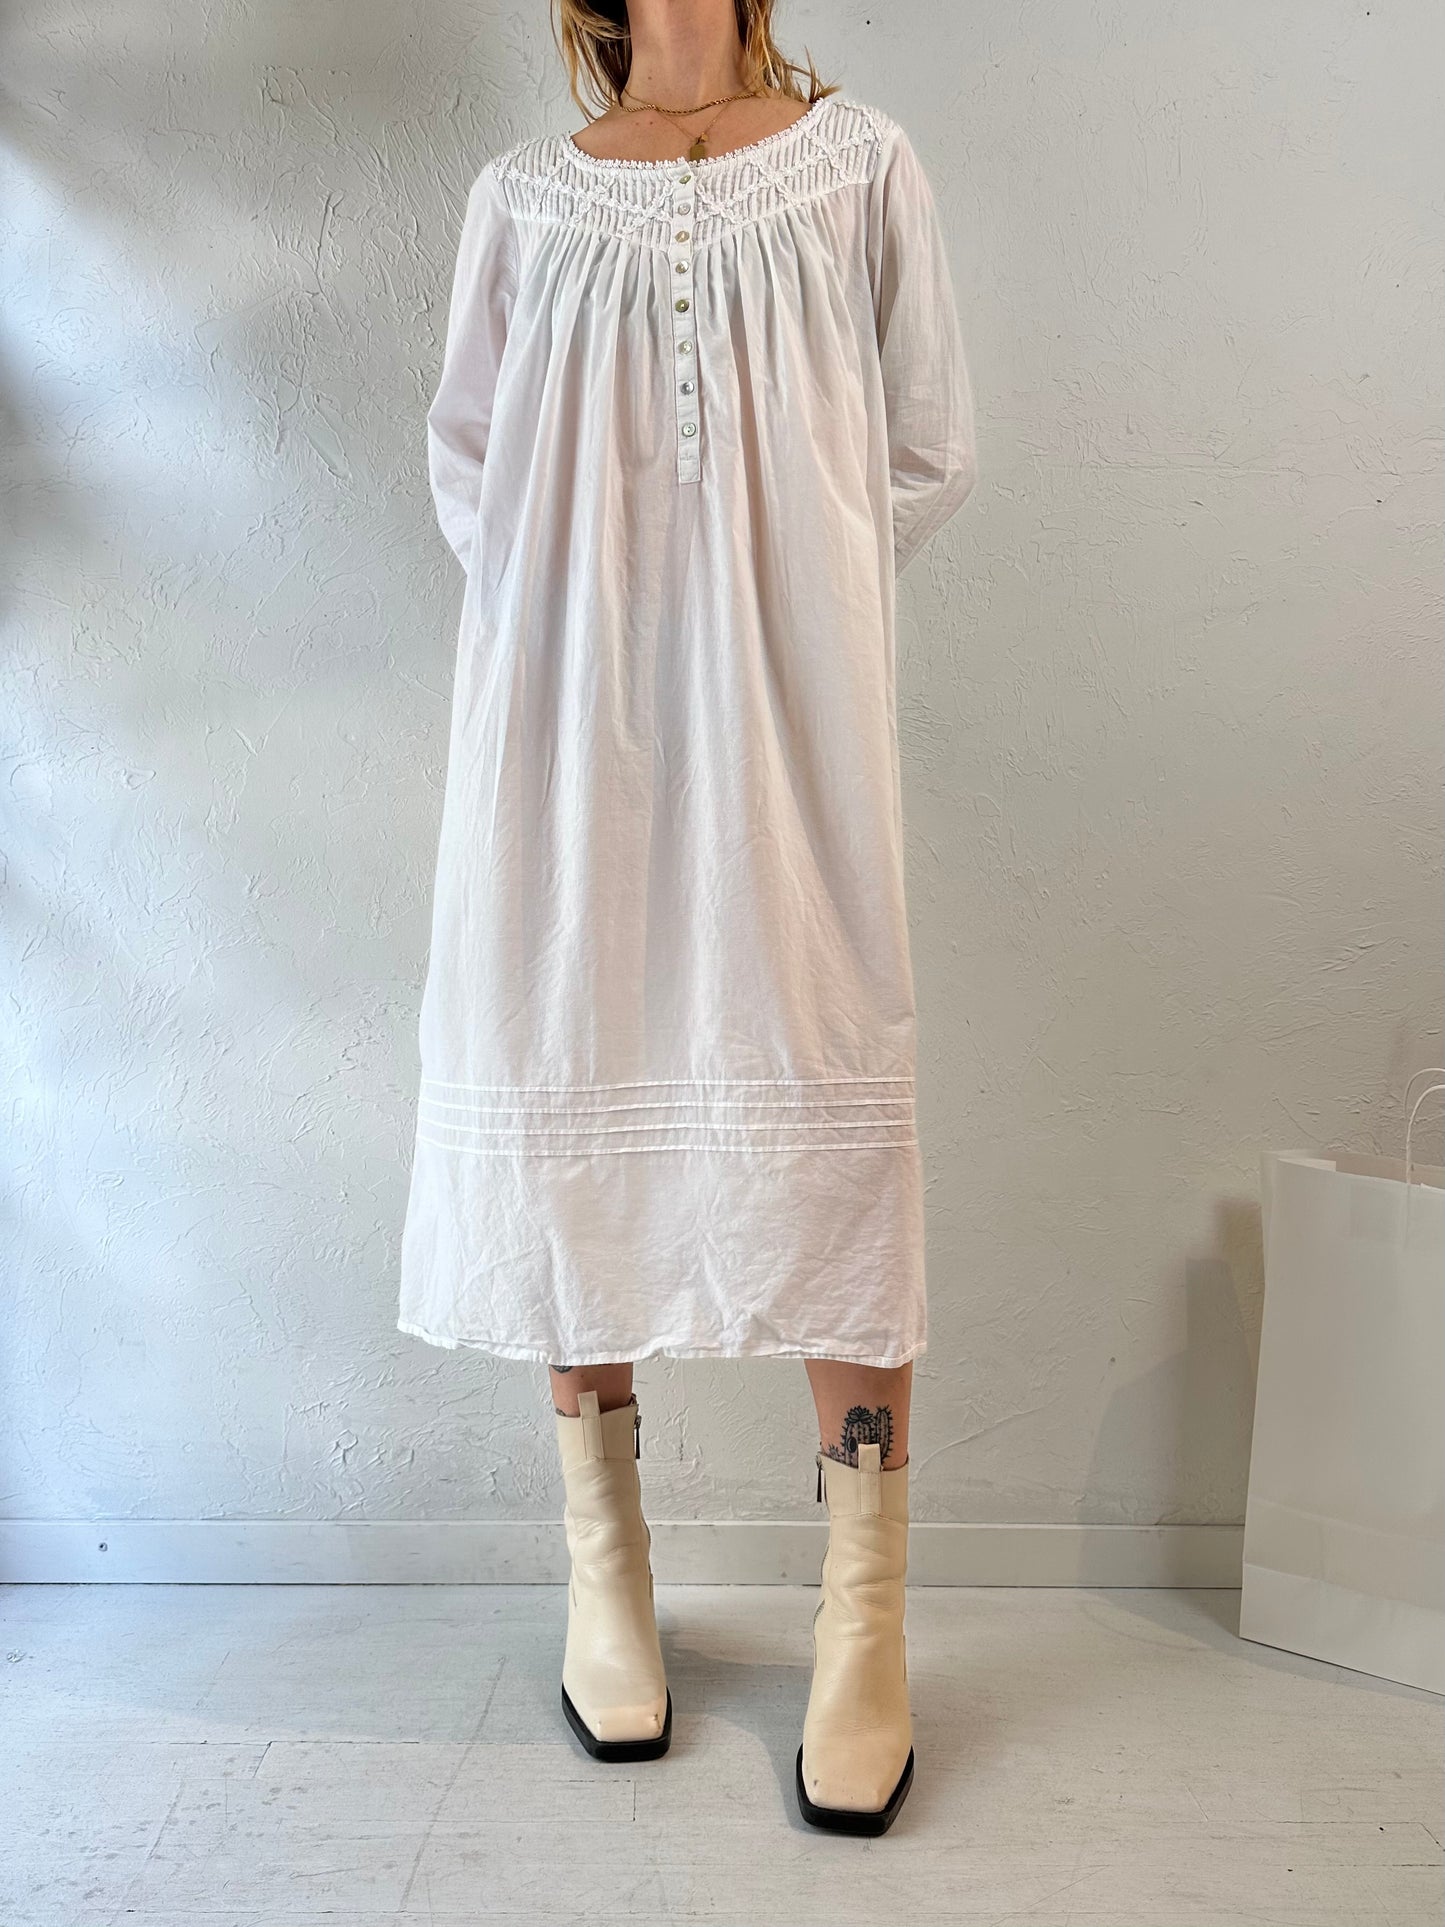 Y2k 'Eileen West' White Cotton Long Sleeve Midi Dress / Small